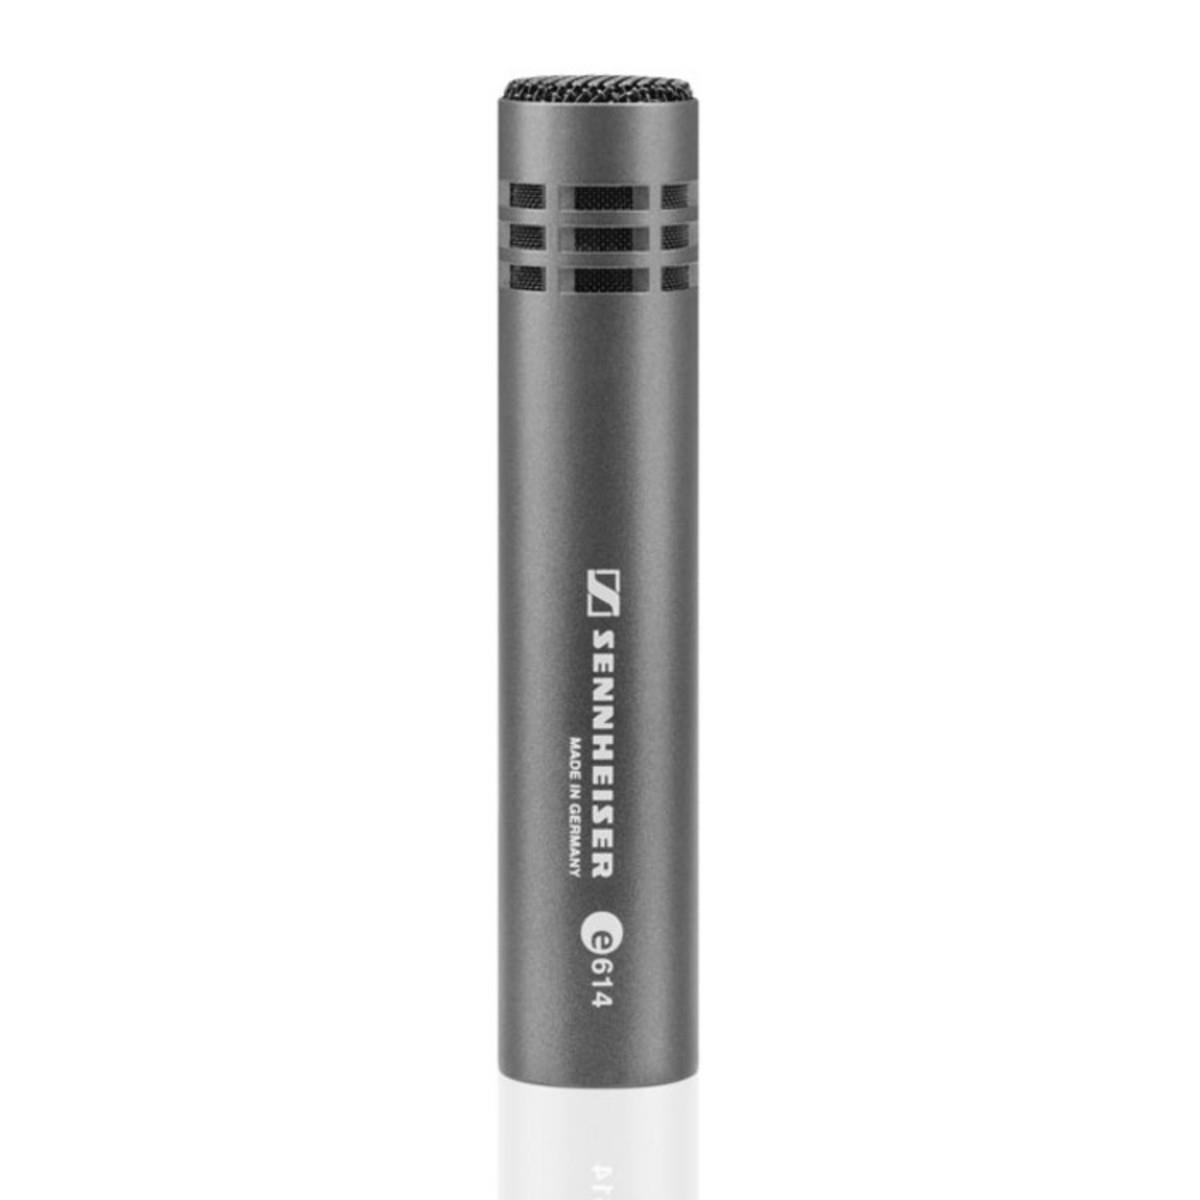 Sennheiser E614 Condenser Instrument Microphone - DY Pro Audio